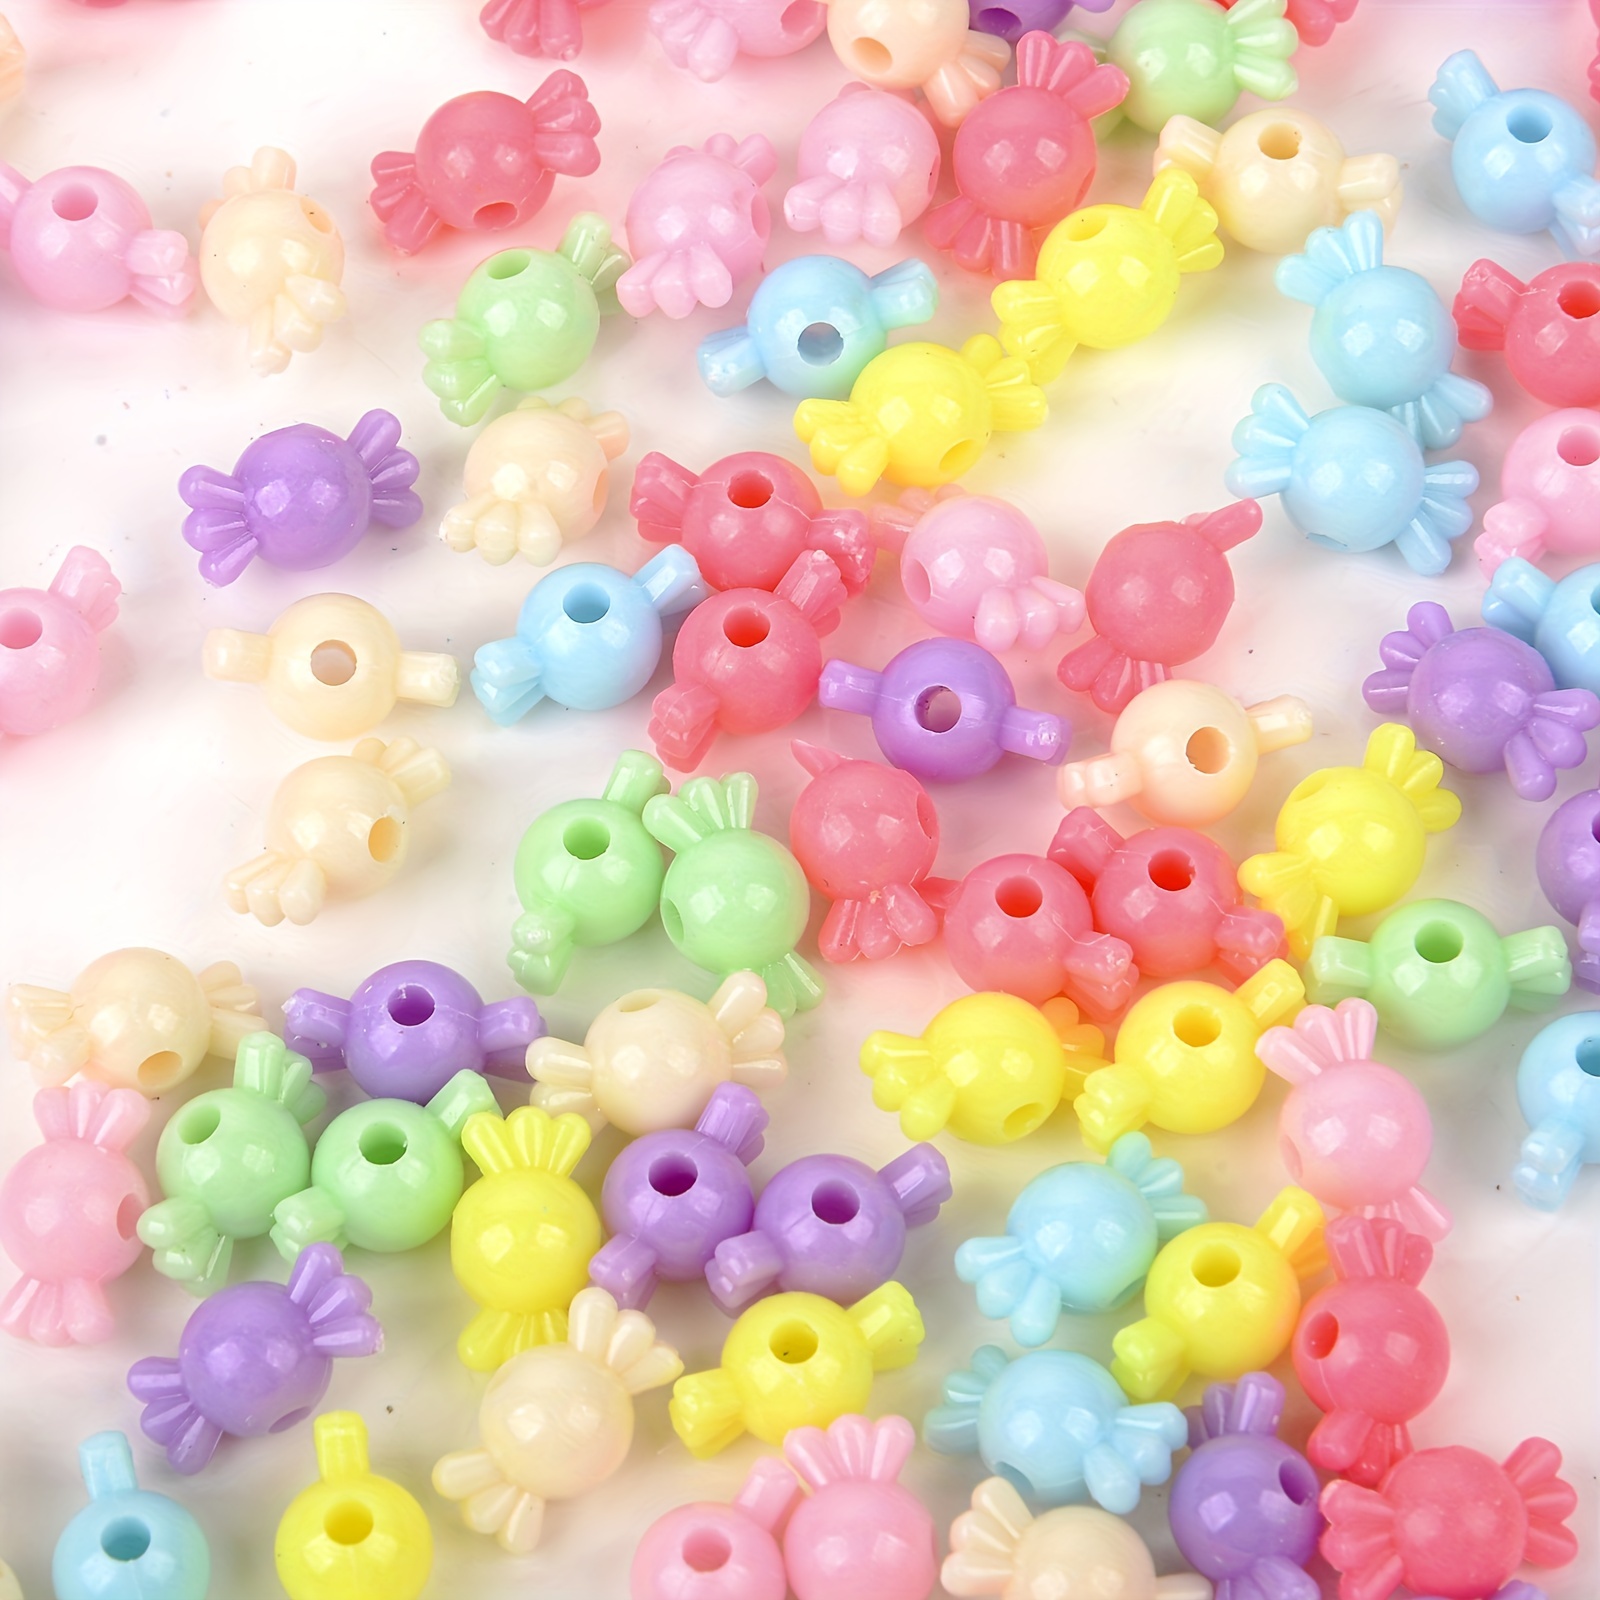 AP1627 Fun Acrylic Colorful Dice Beads Spacers CHOOSE COLOR BELOW